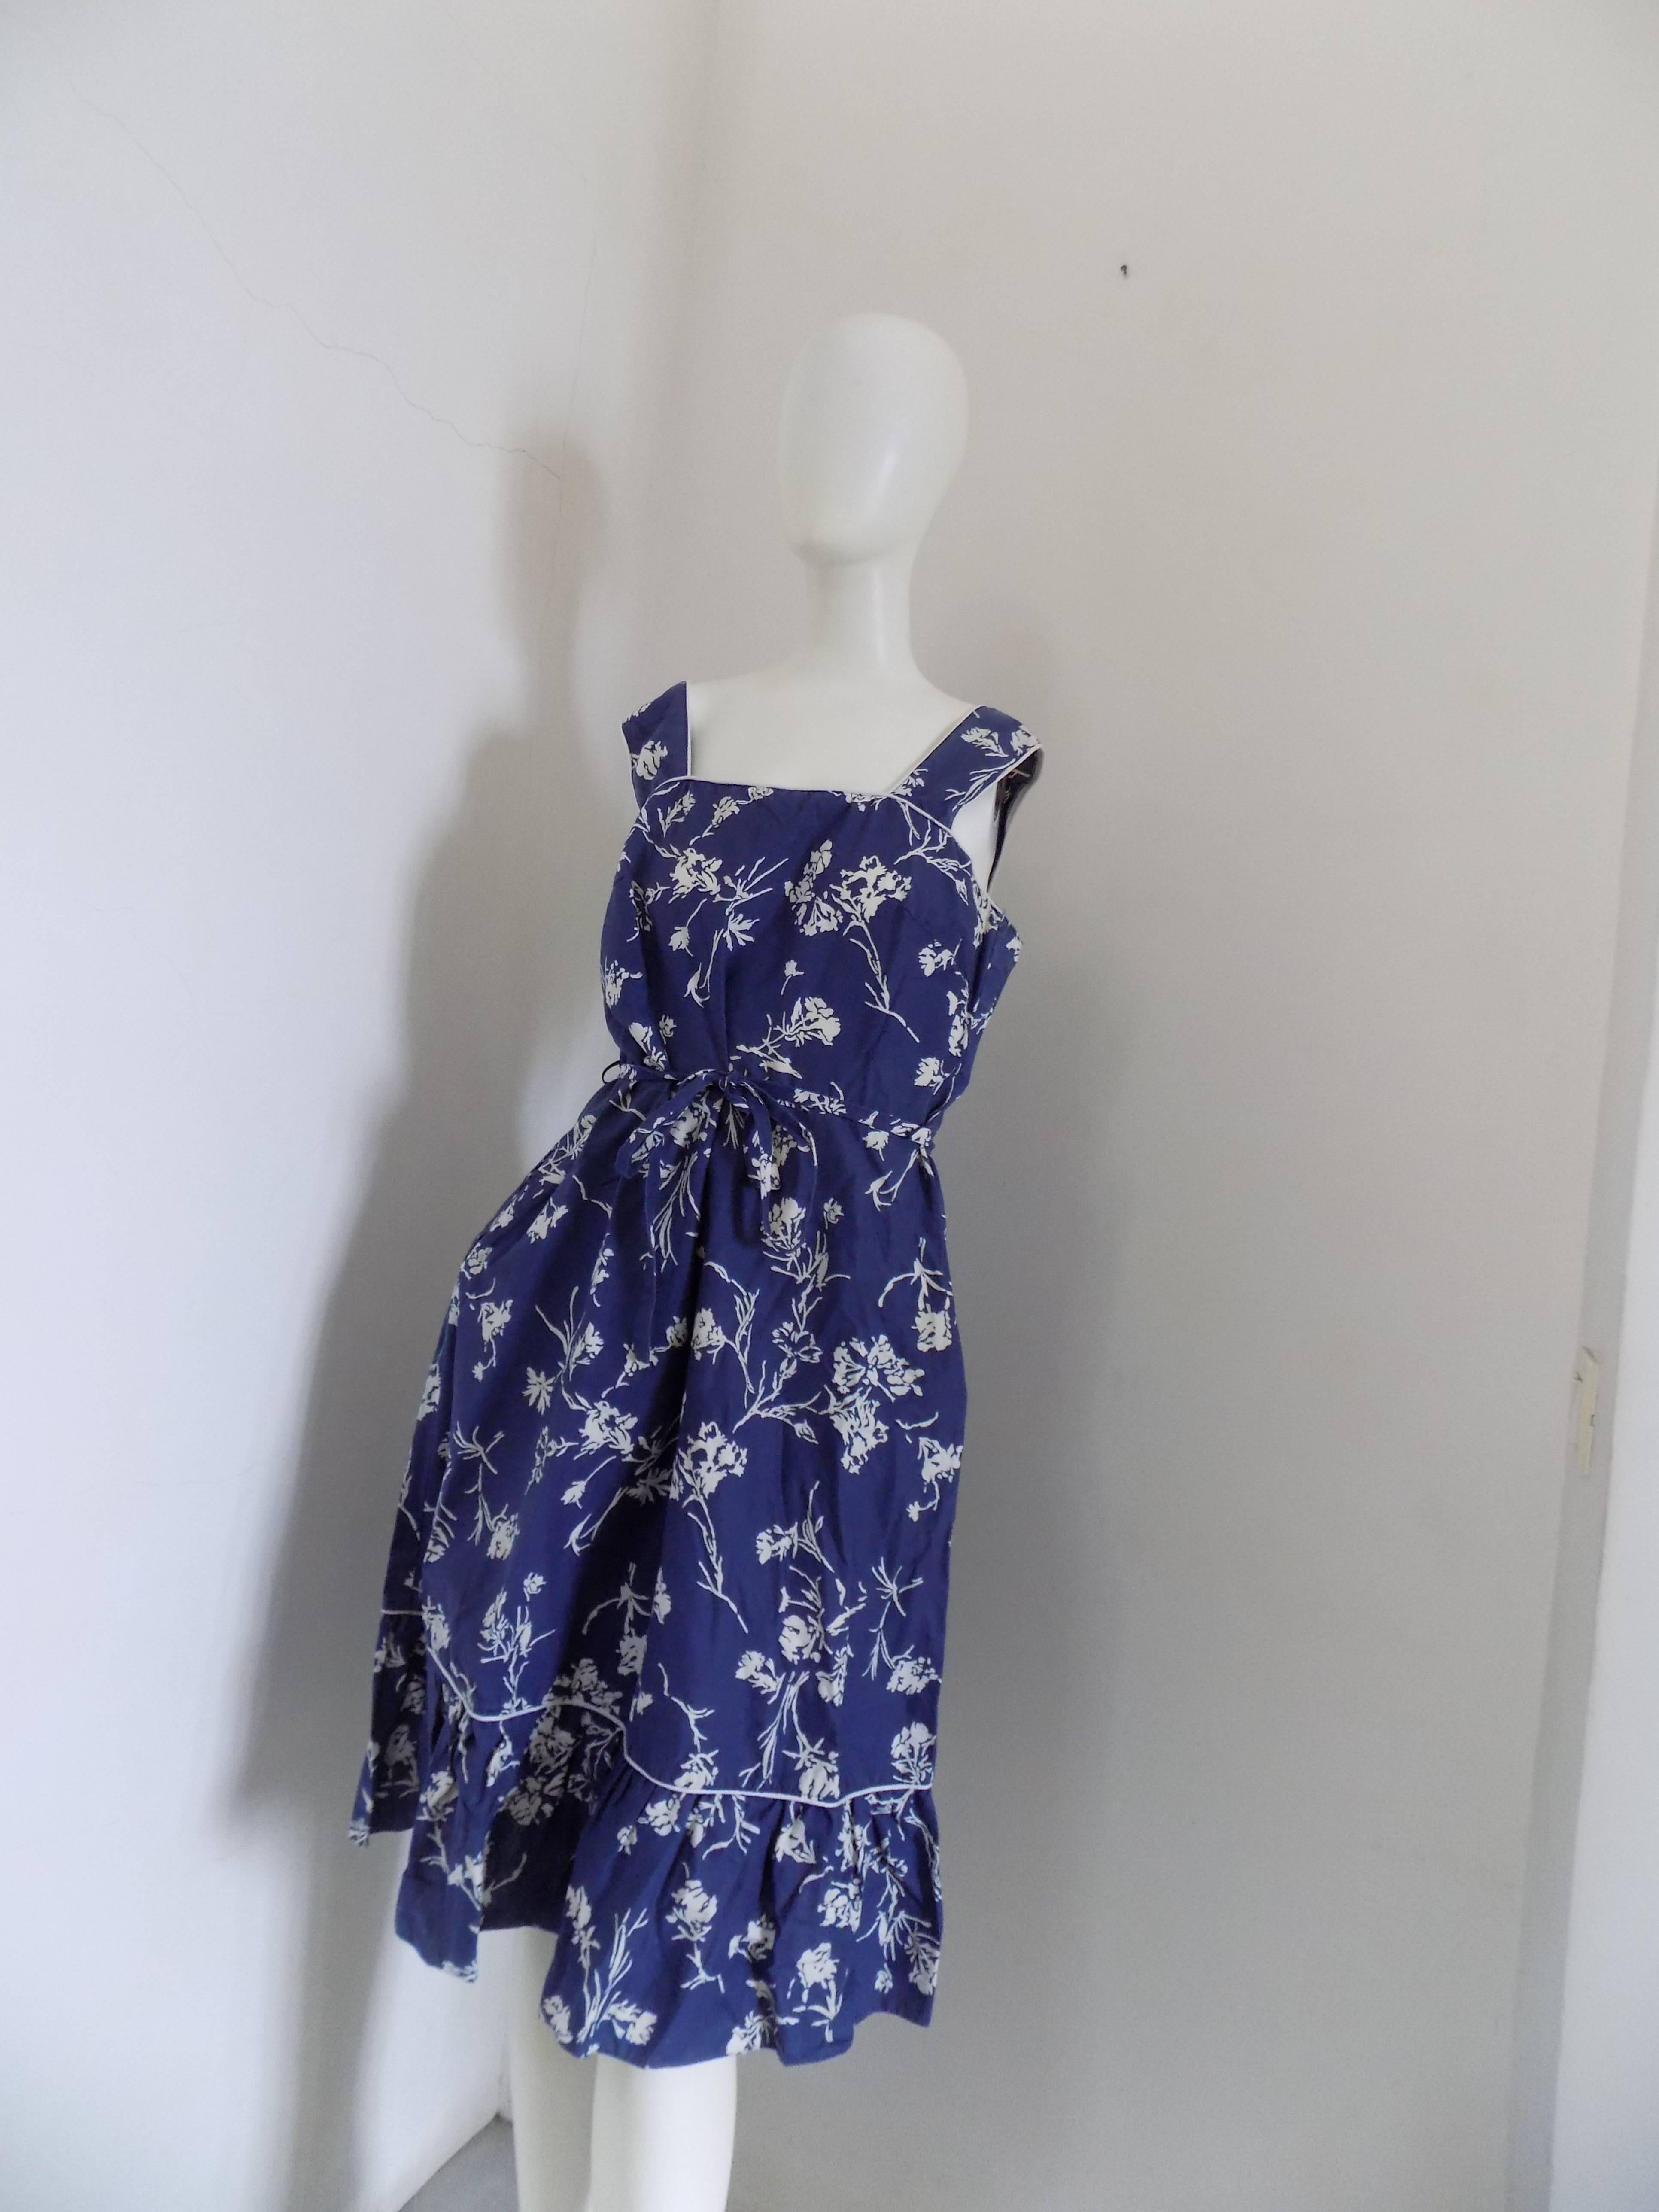 1980s Blu White Flower Dress

